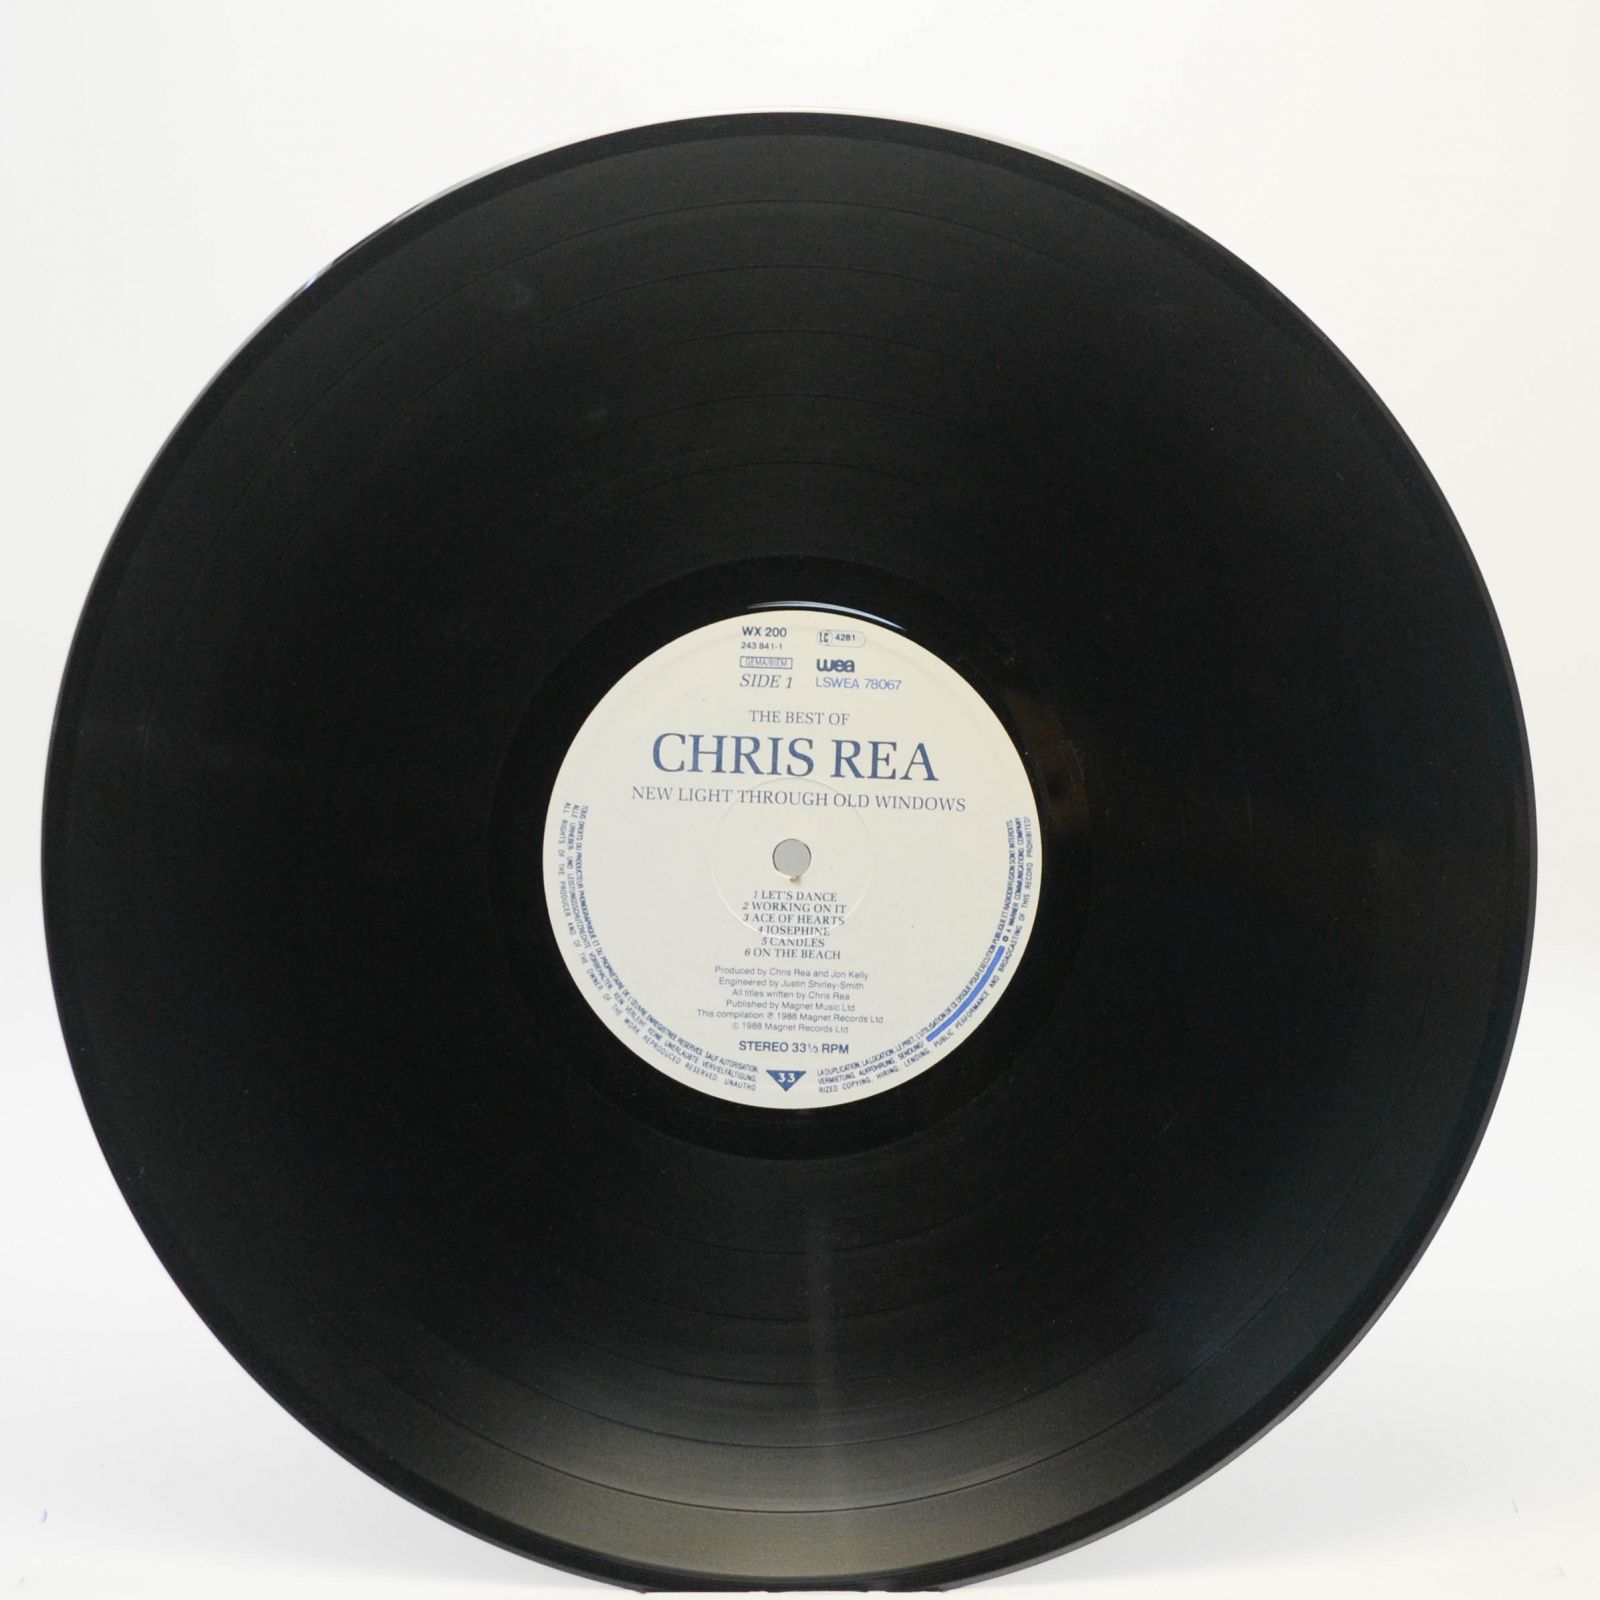 Chris Rea — New Light Through Old Windows (The Best Of Chris Rea), 1988